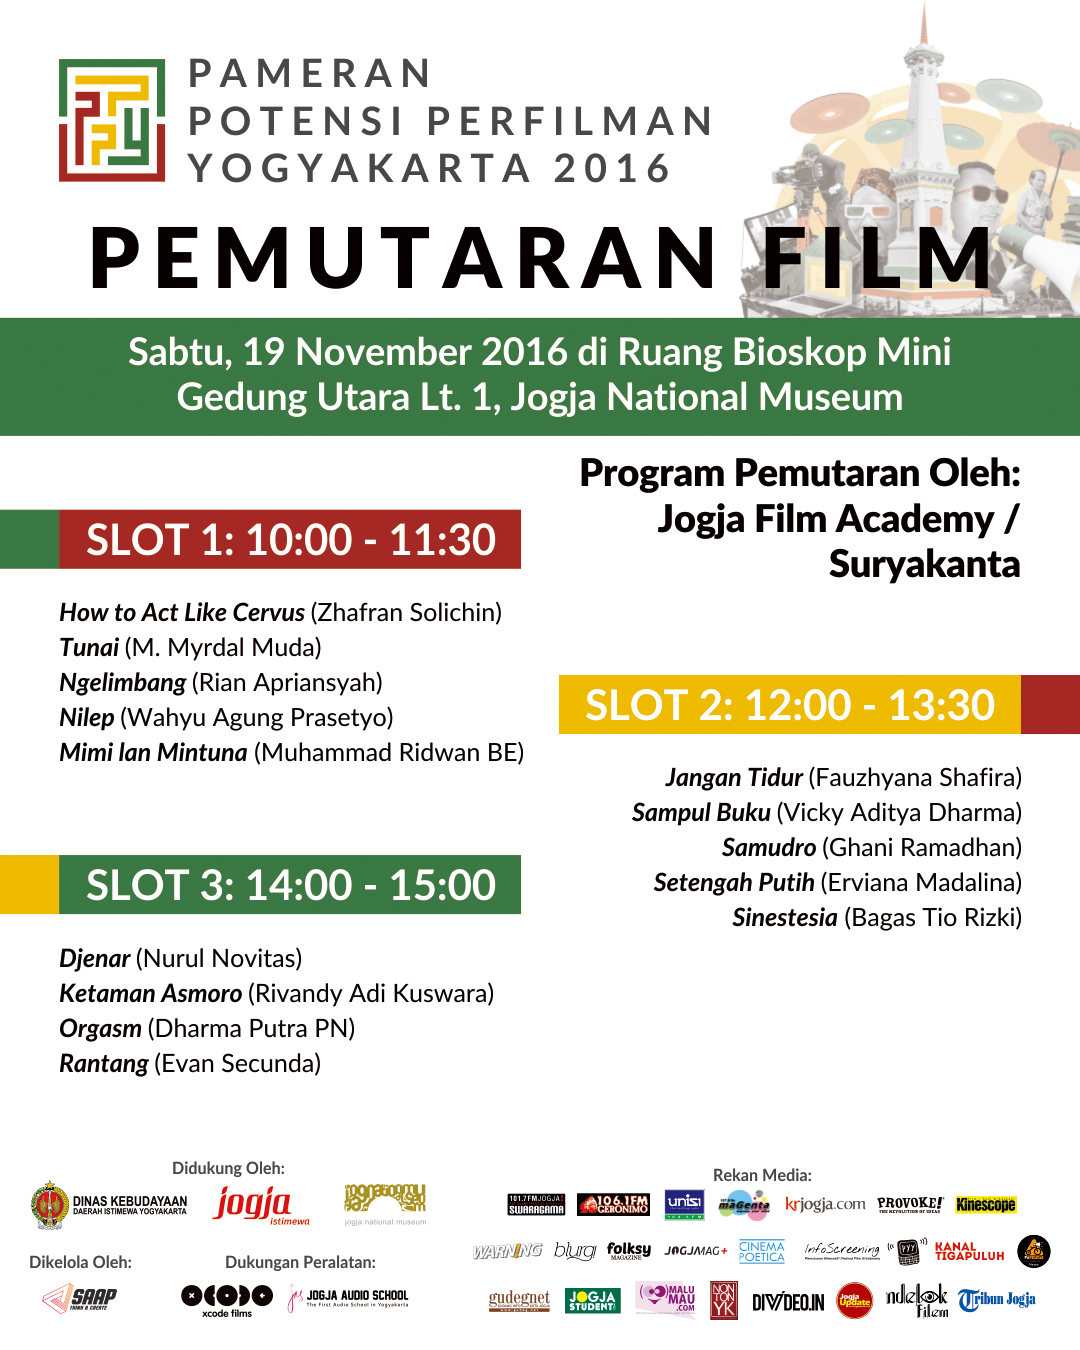 Pameran Potensi Perfilman Yogyakarta 2016 Jogja Film Academy